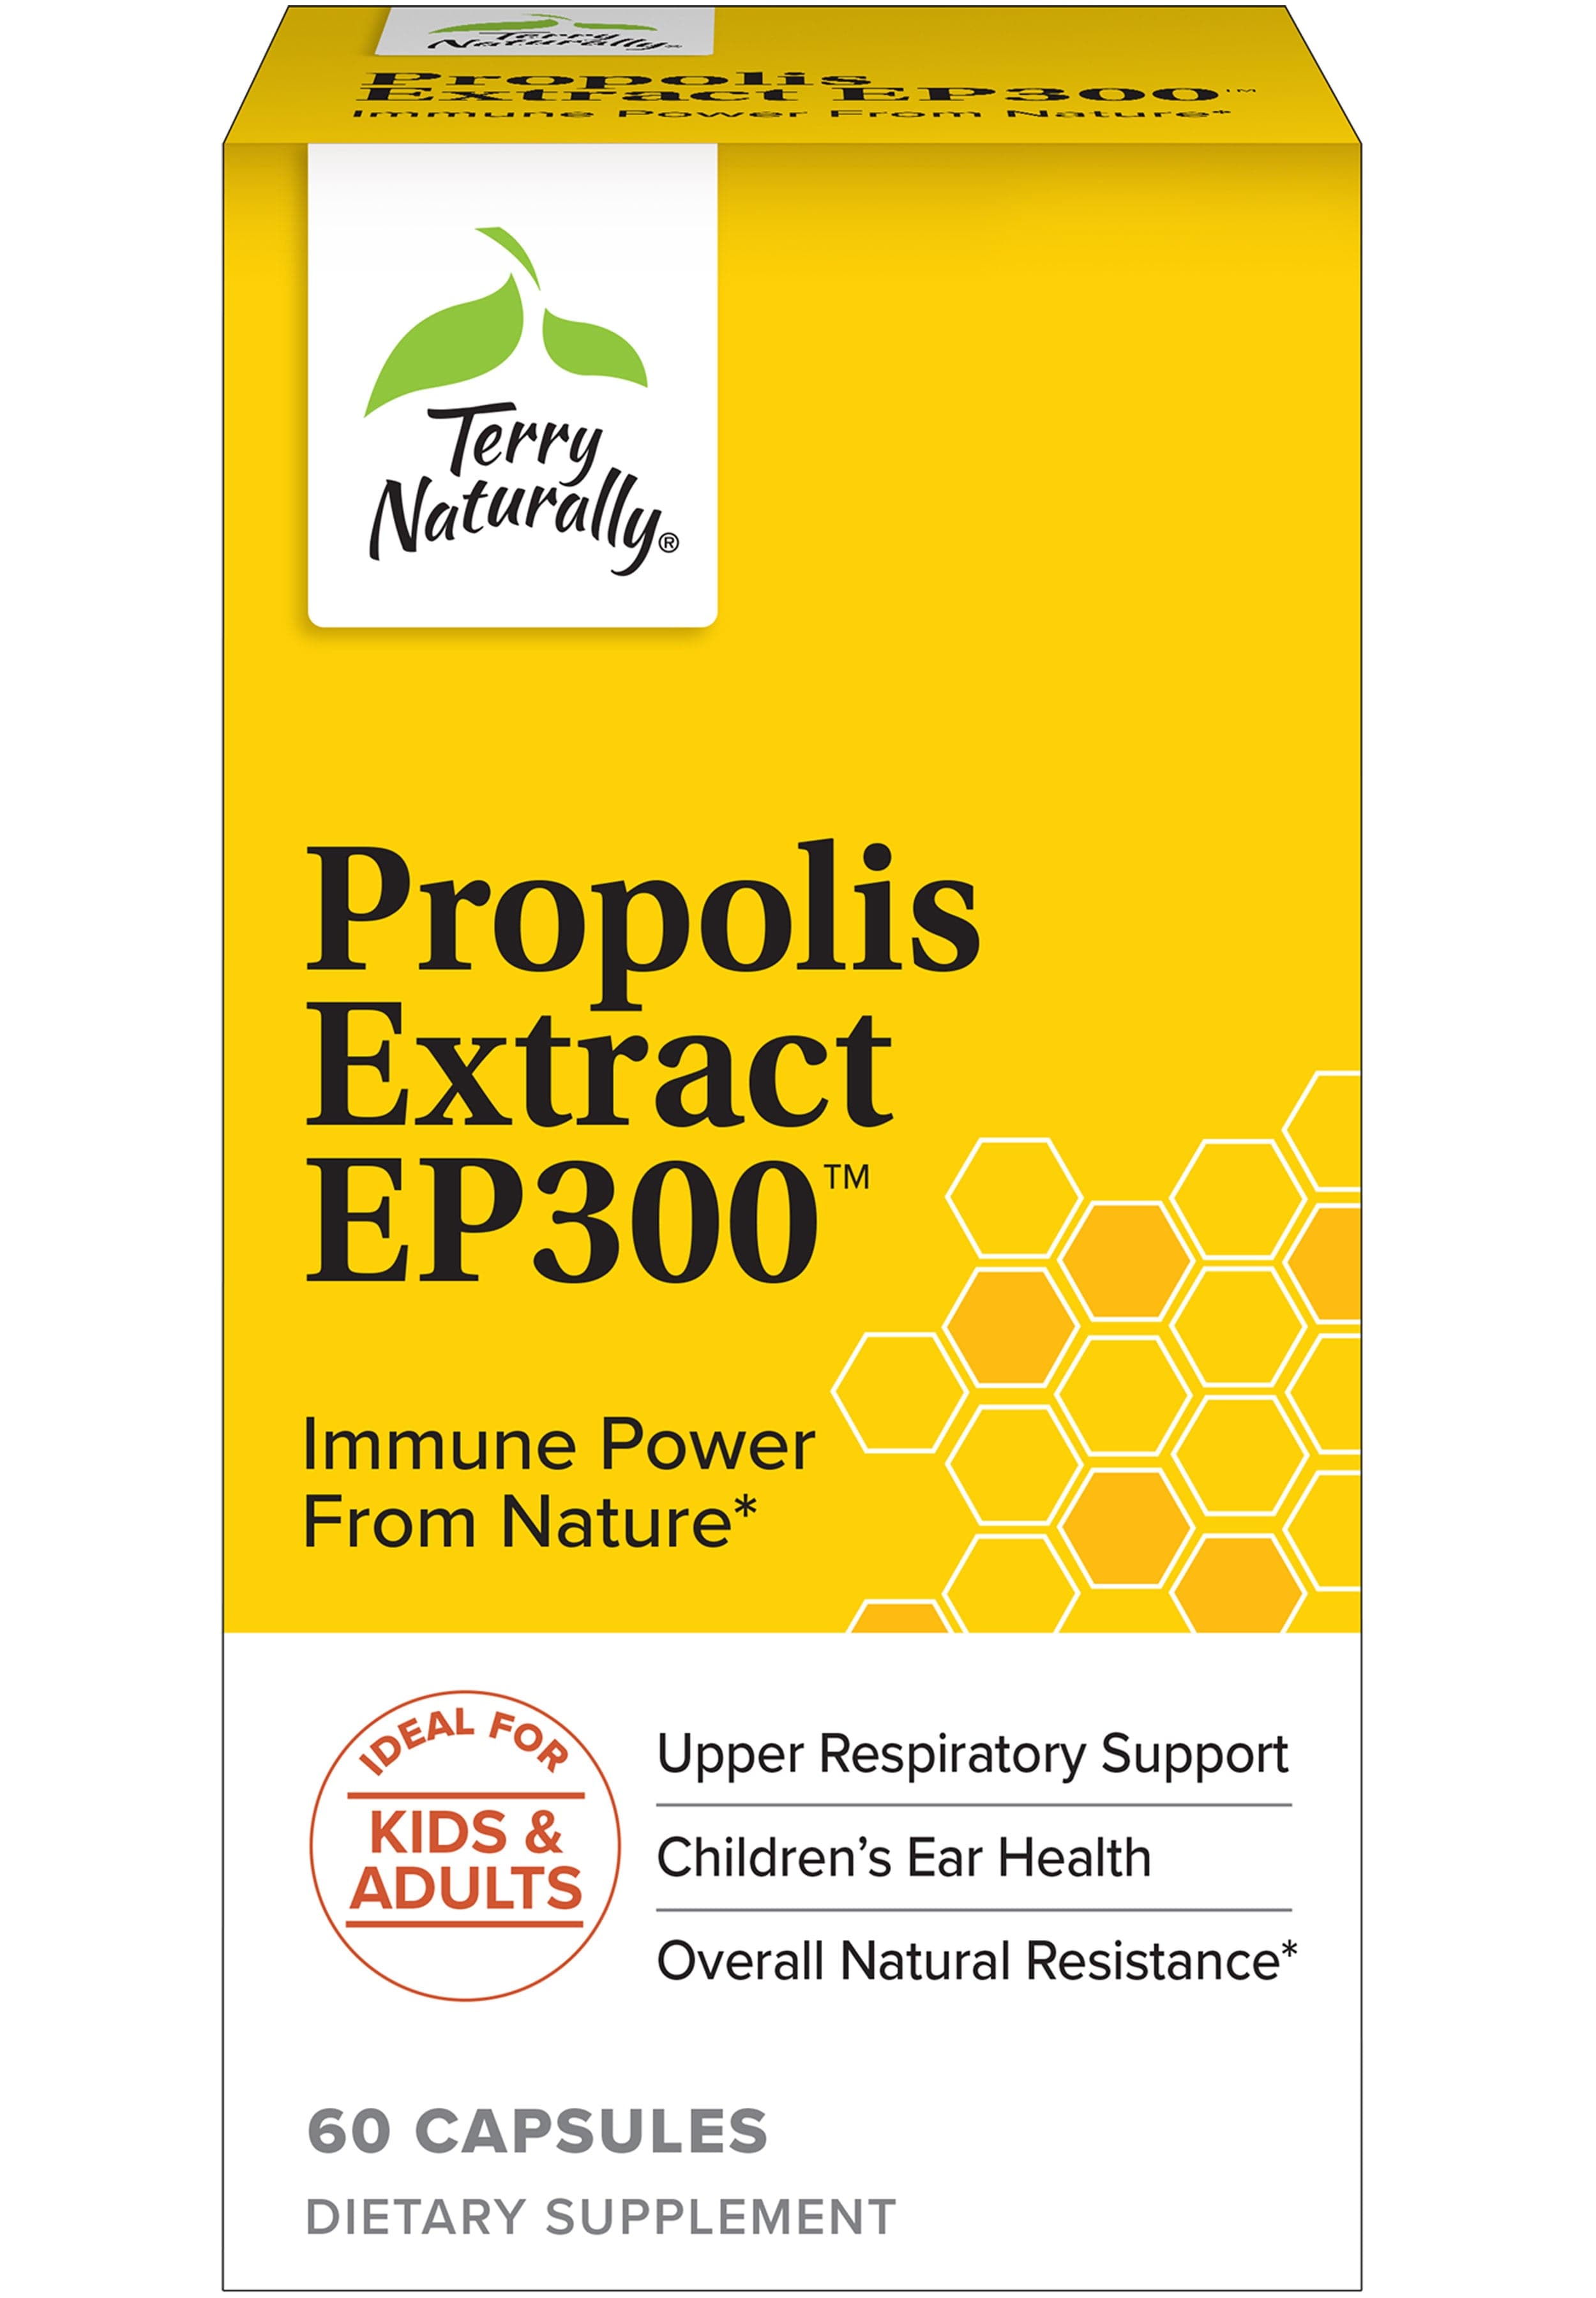 Terry Naturally Propolis Extract EP300